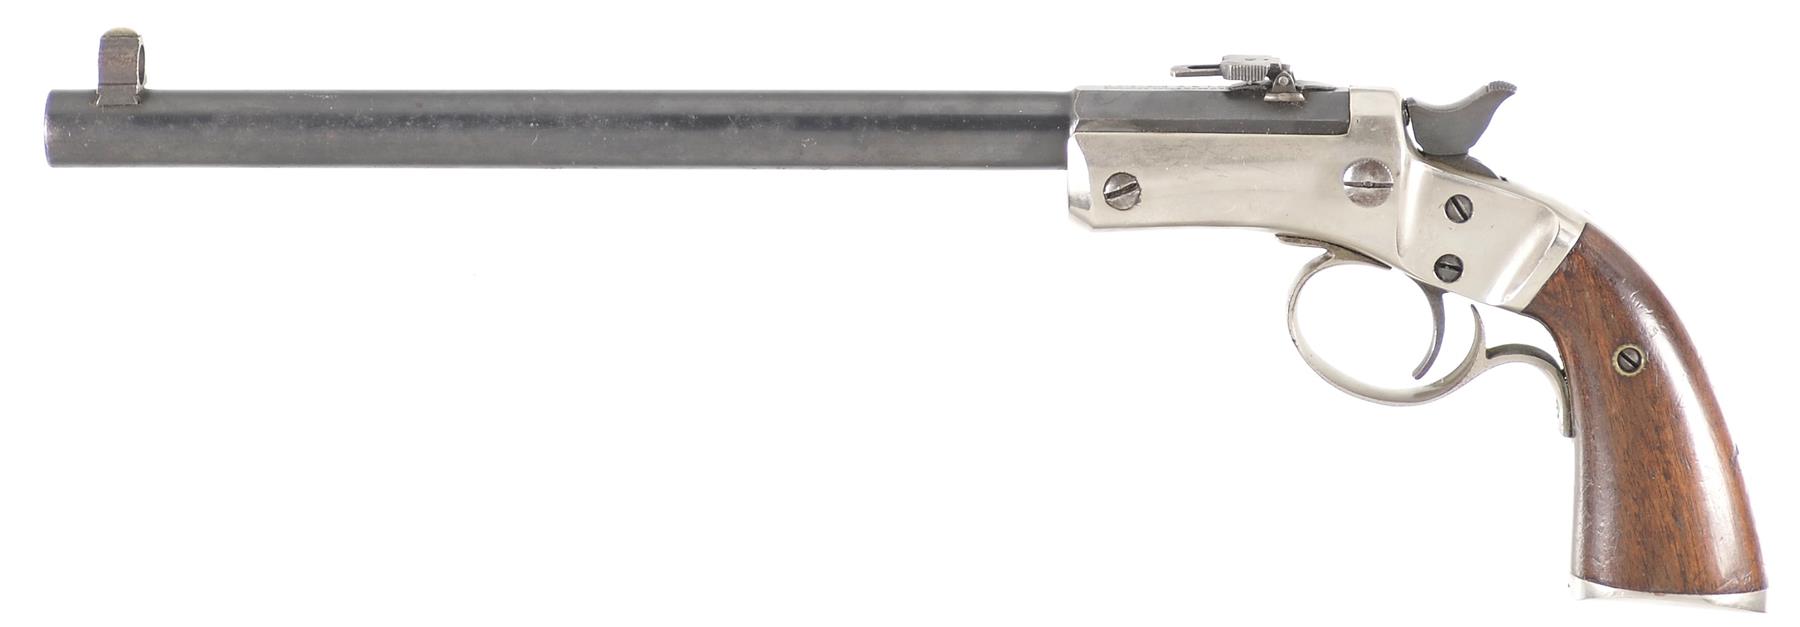 Stevens J Arms Co New Pocket-Rifle Pistol 22 | Rock Island Auction